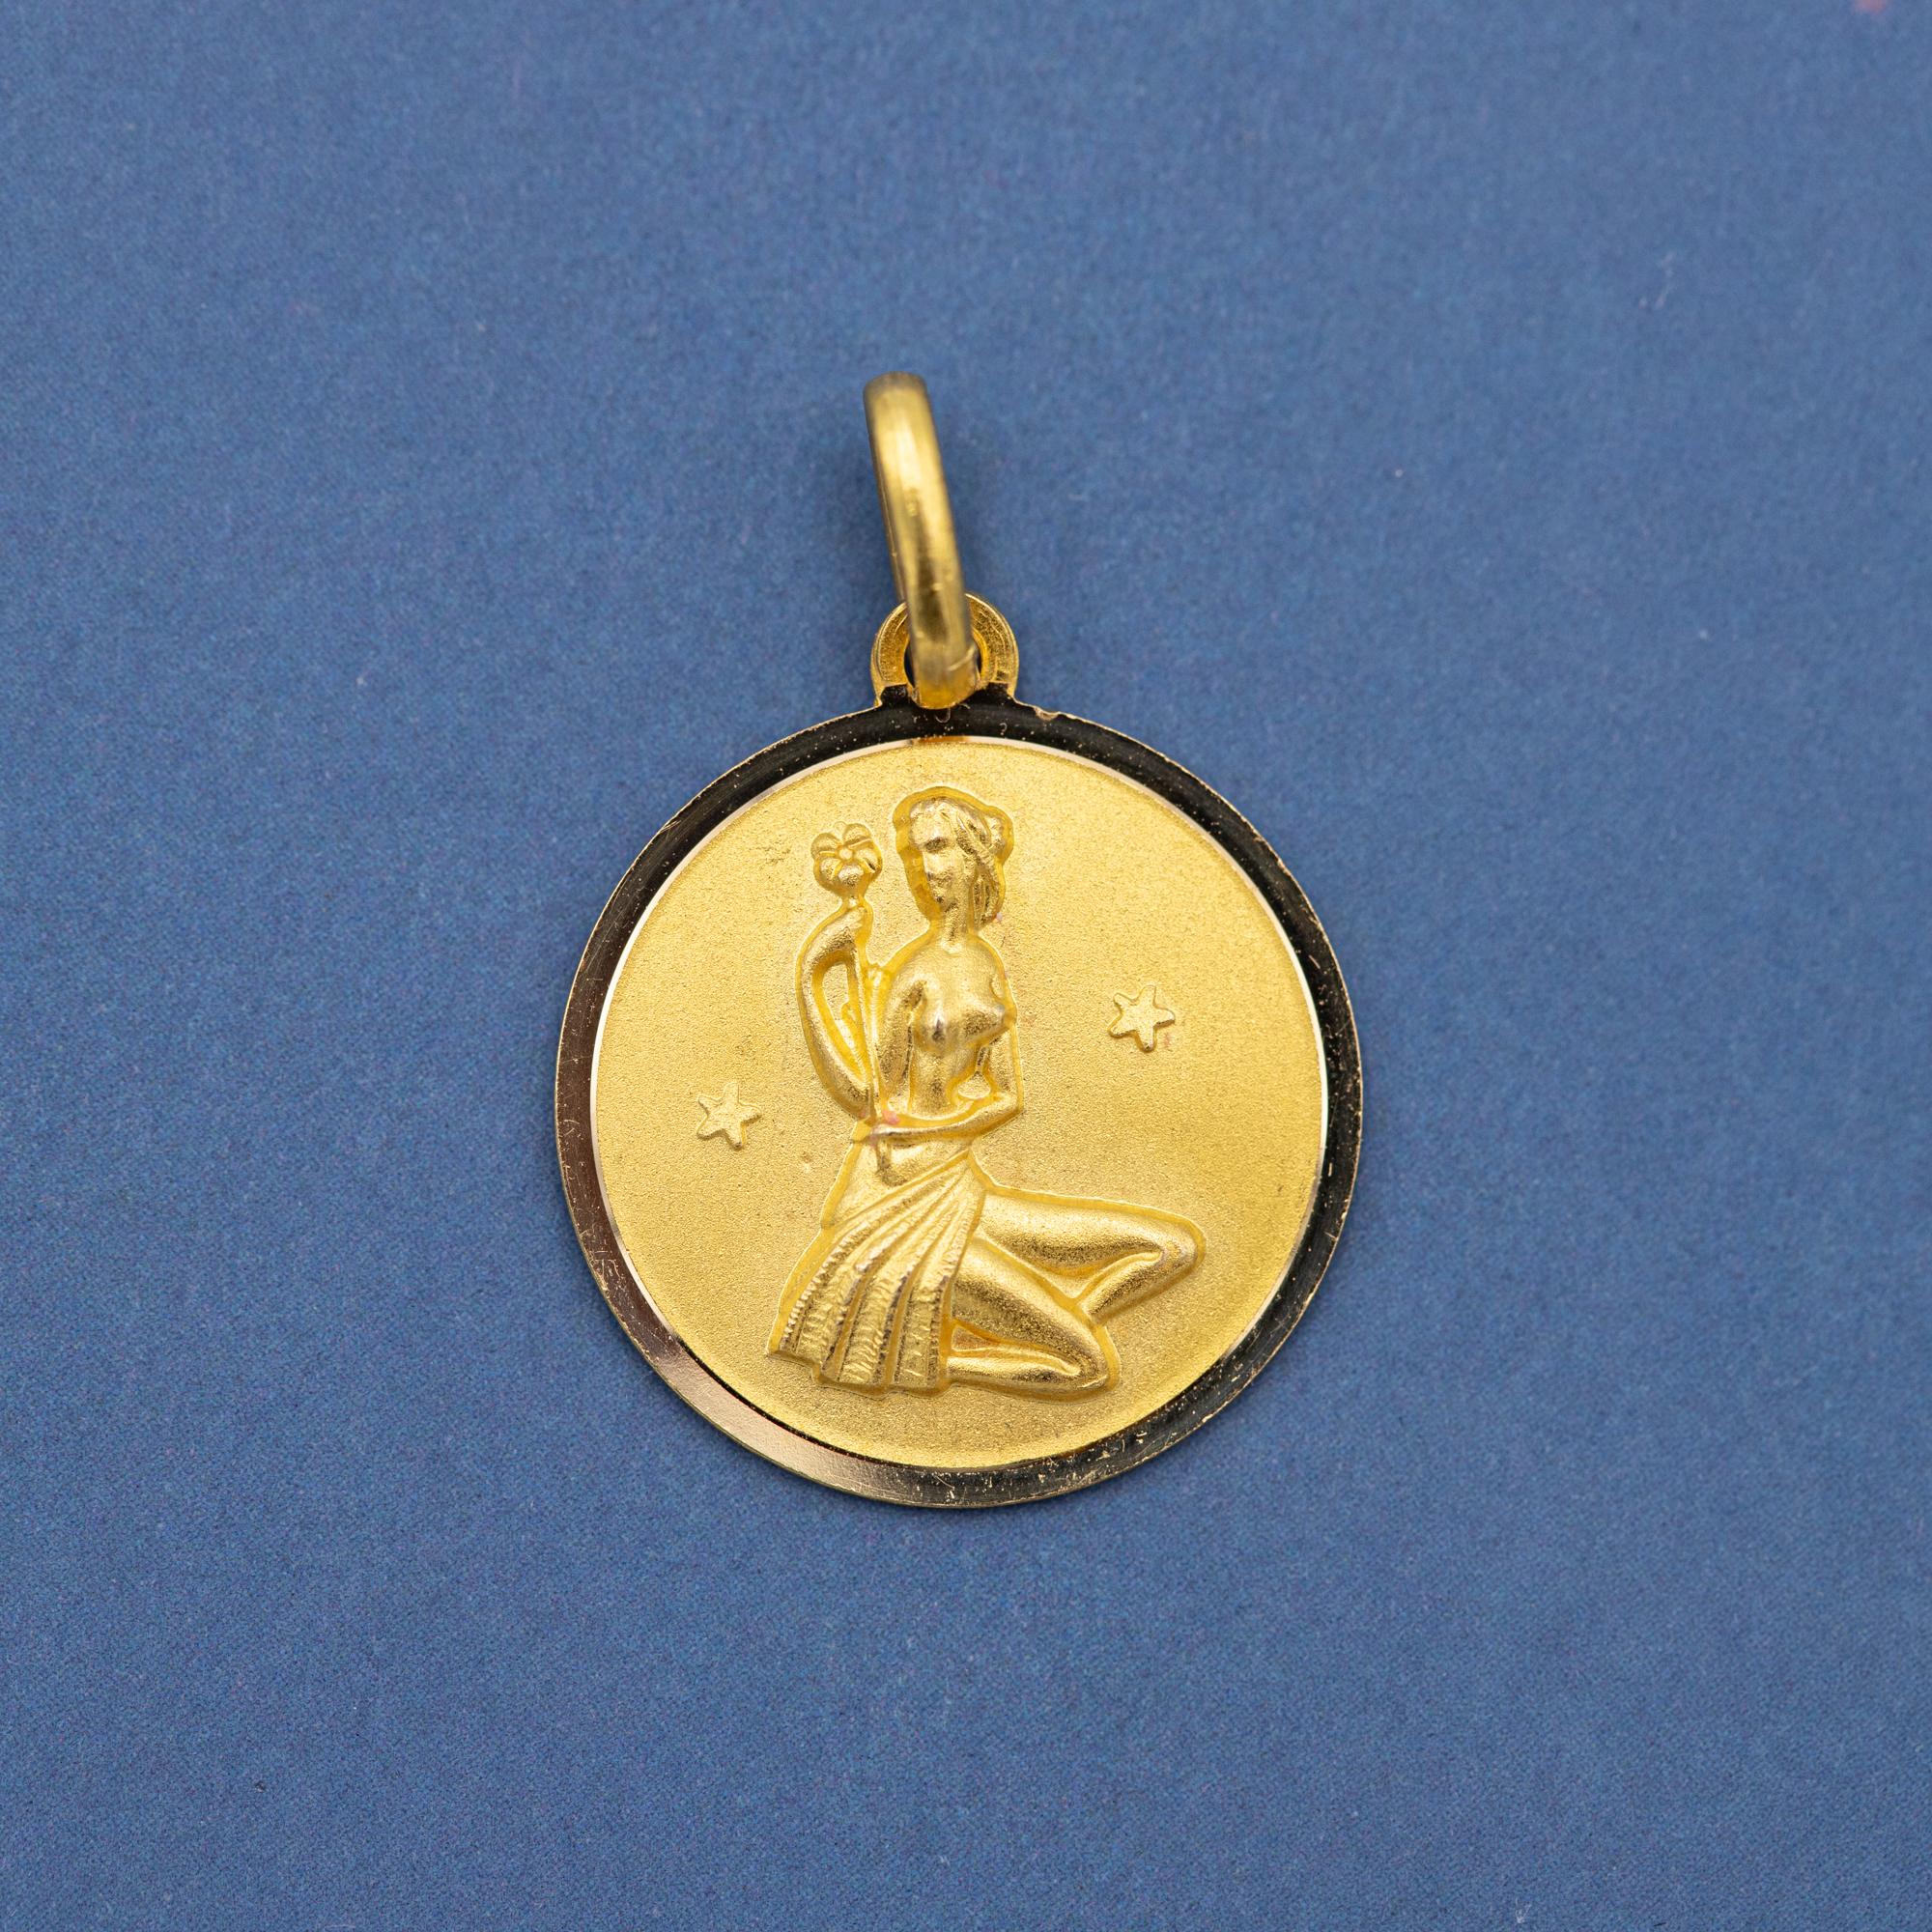 Vintage 18k zodiac charm pendant - Virgo charm - solid yellow gold For Sale 2